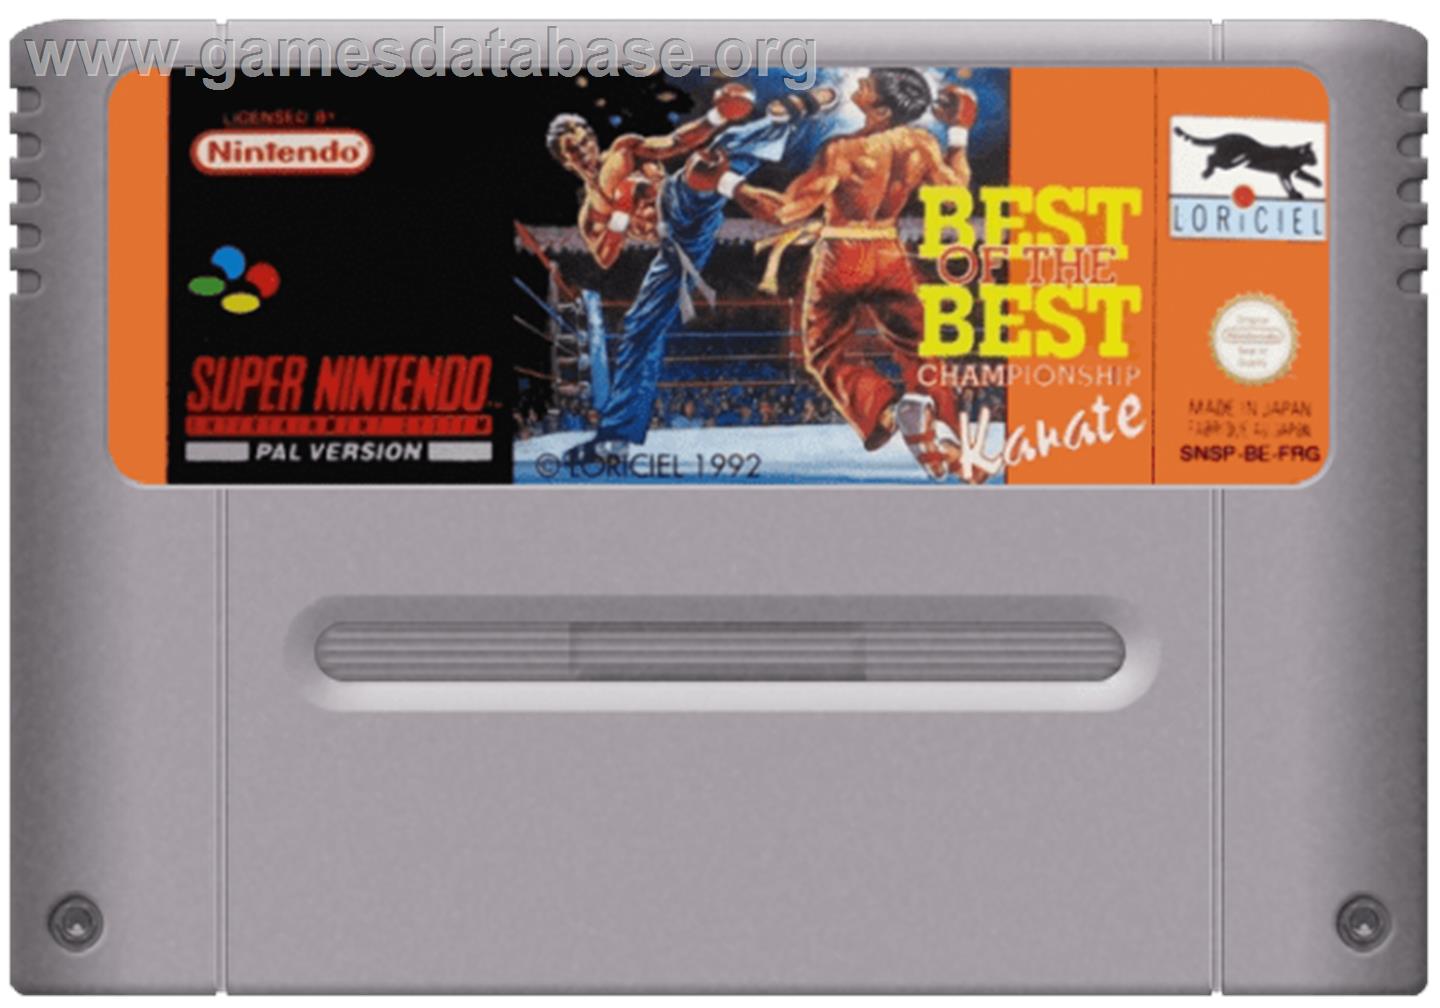 Best of the Best Championship Karate - Nintendo SNES - Artwork - Cartridge